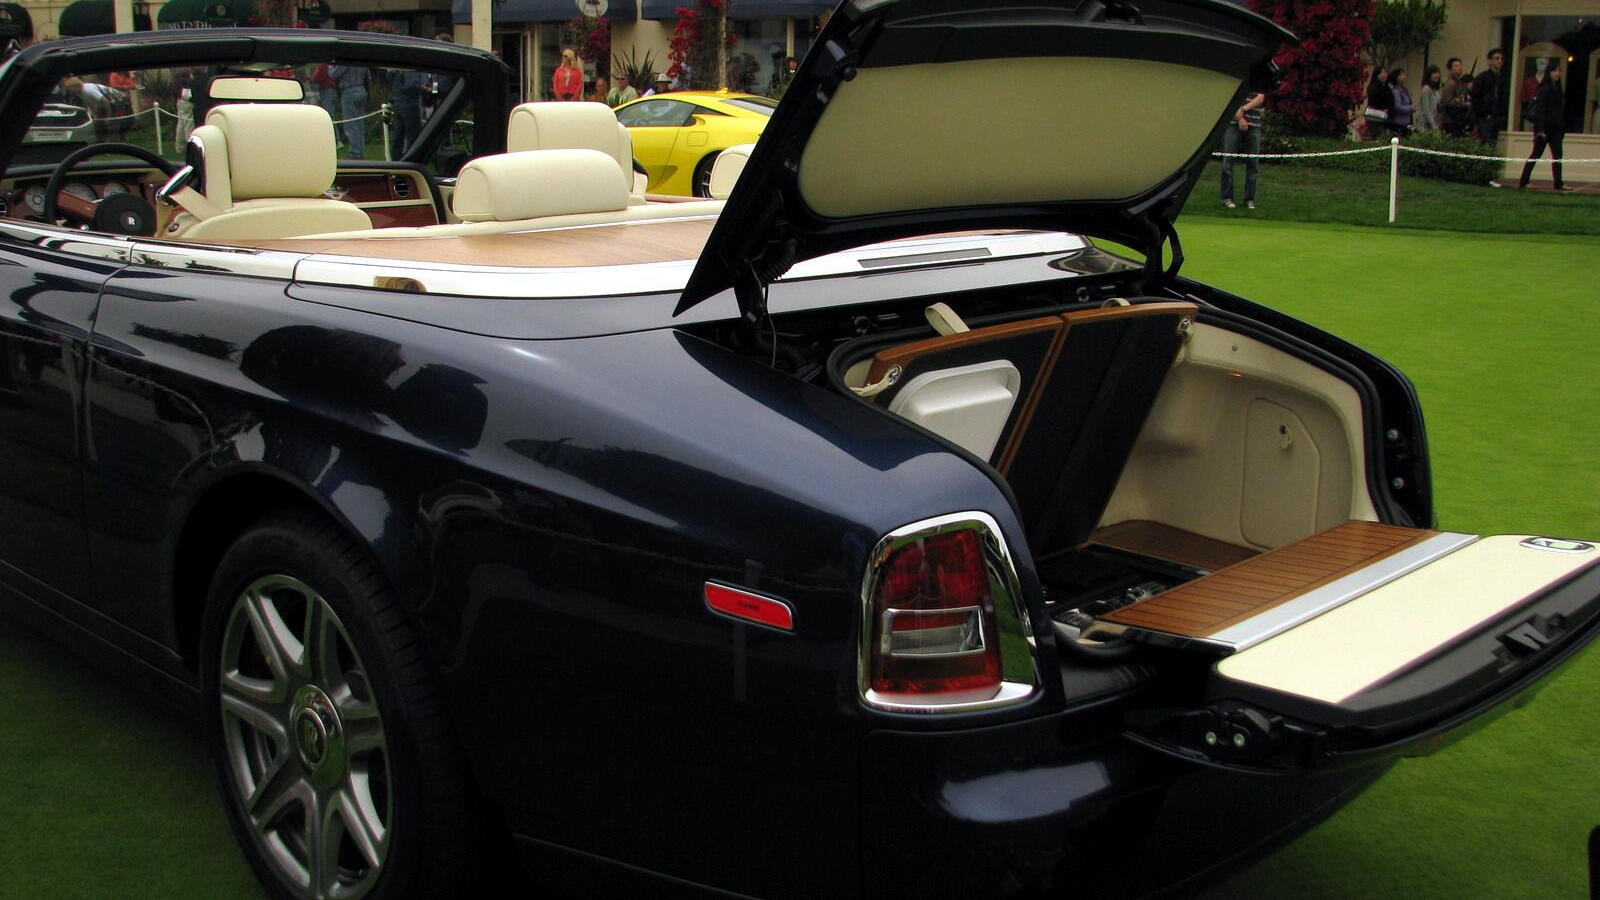 Rolls Royce Phantom with bespoke picnic set